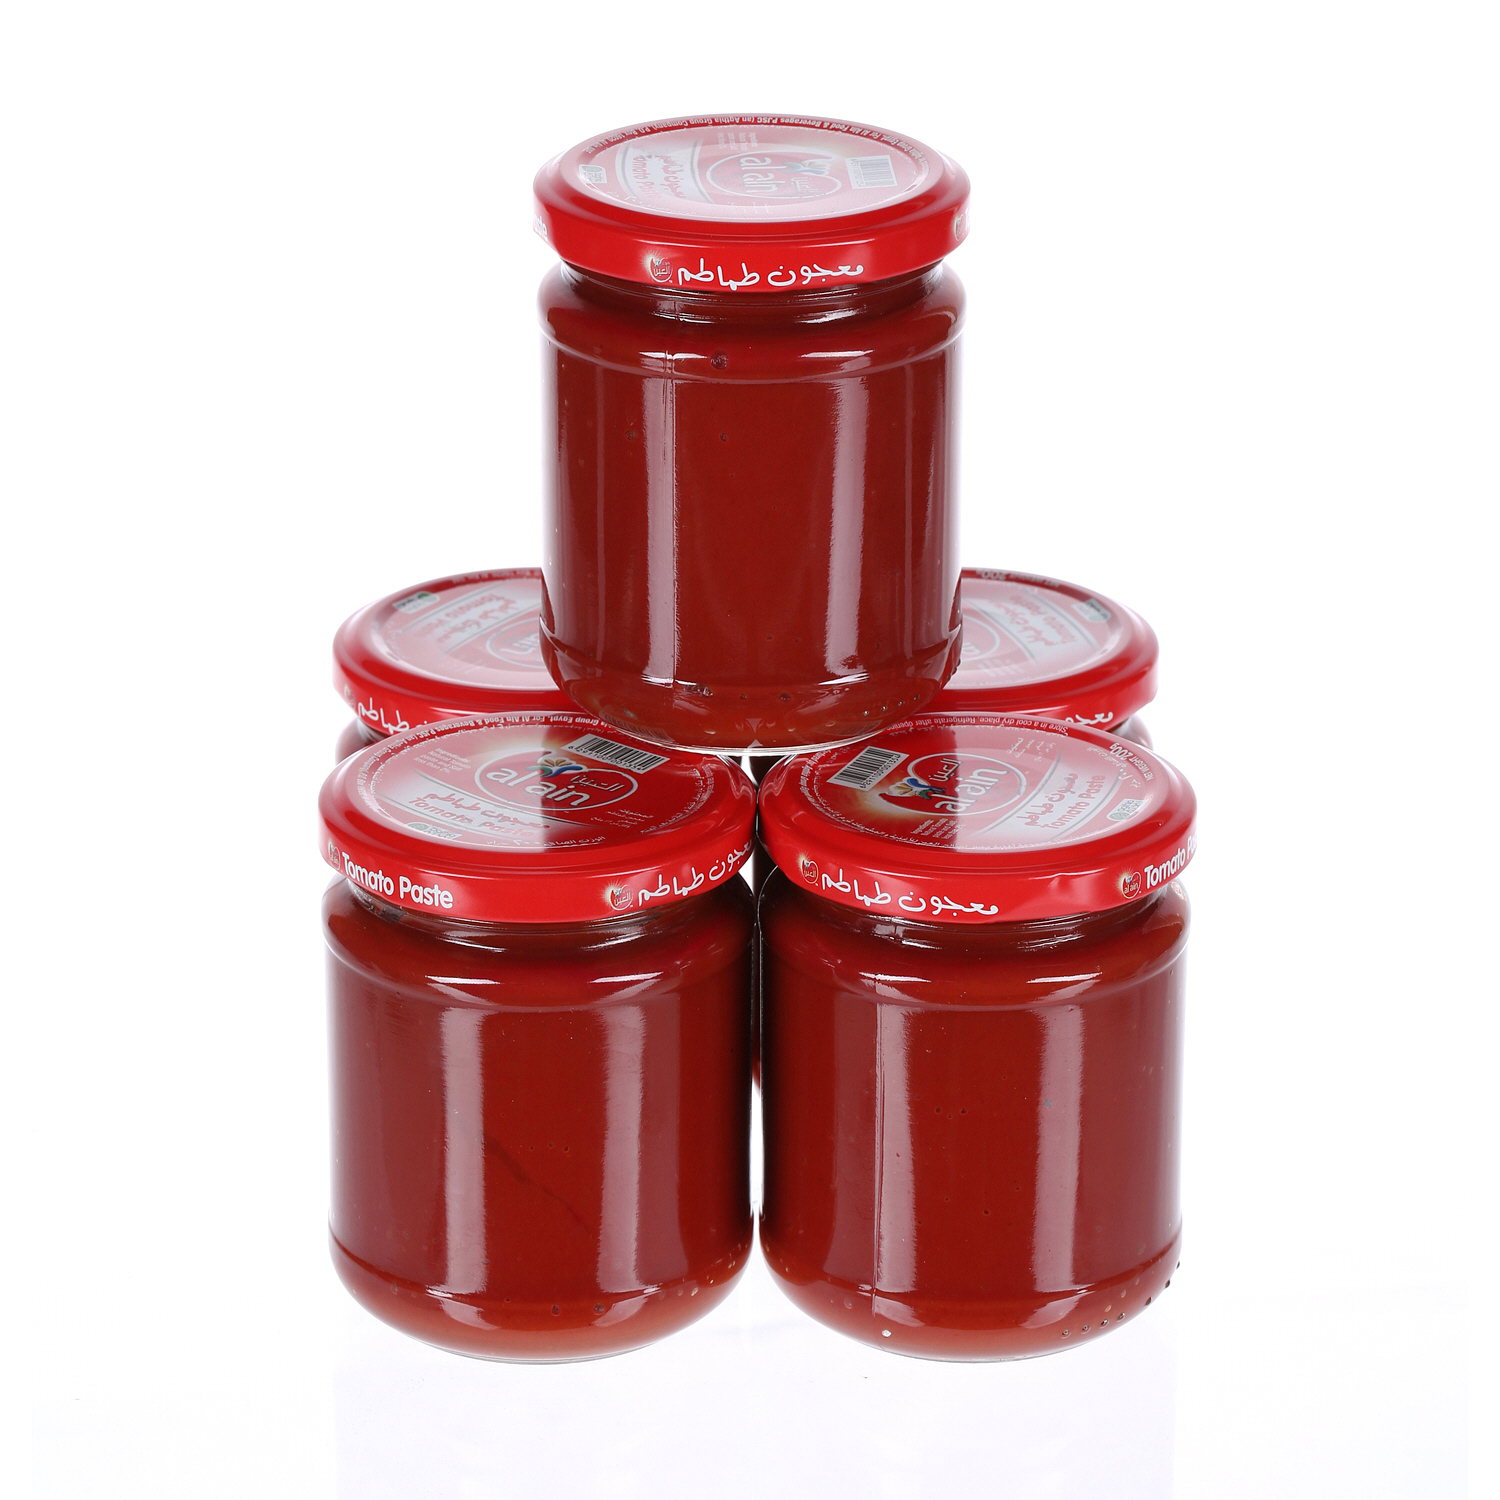 Al Ain Tomato Paste Jar 200 g × 5 Pack